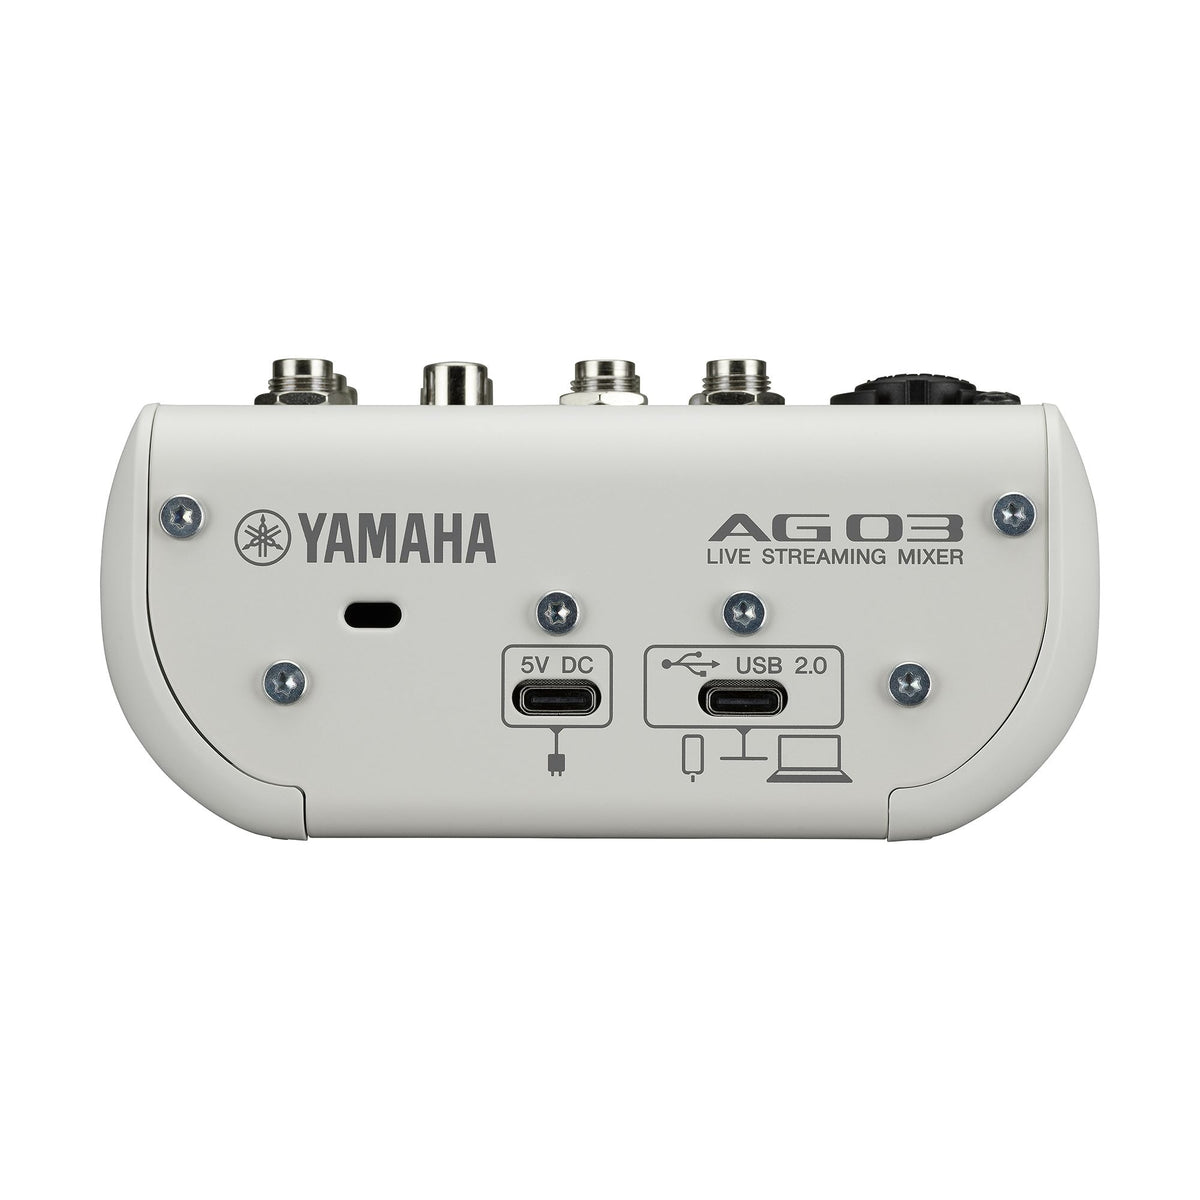 Yamaha AG03MK2W 3-Channel Mixer/USB Audio Interface for iOS/MAC/PC, White